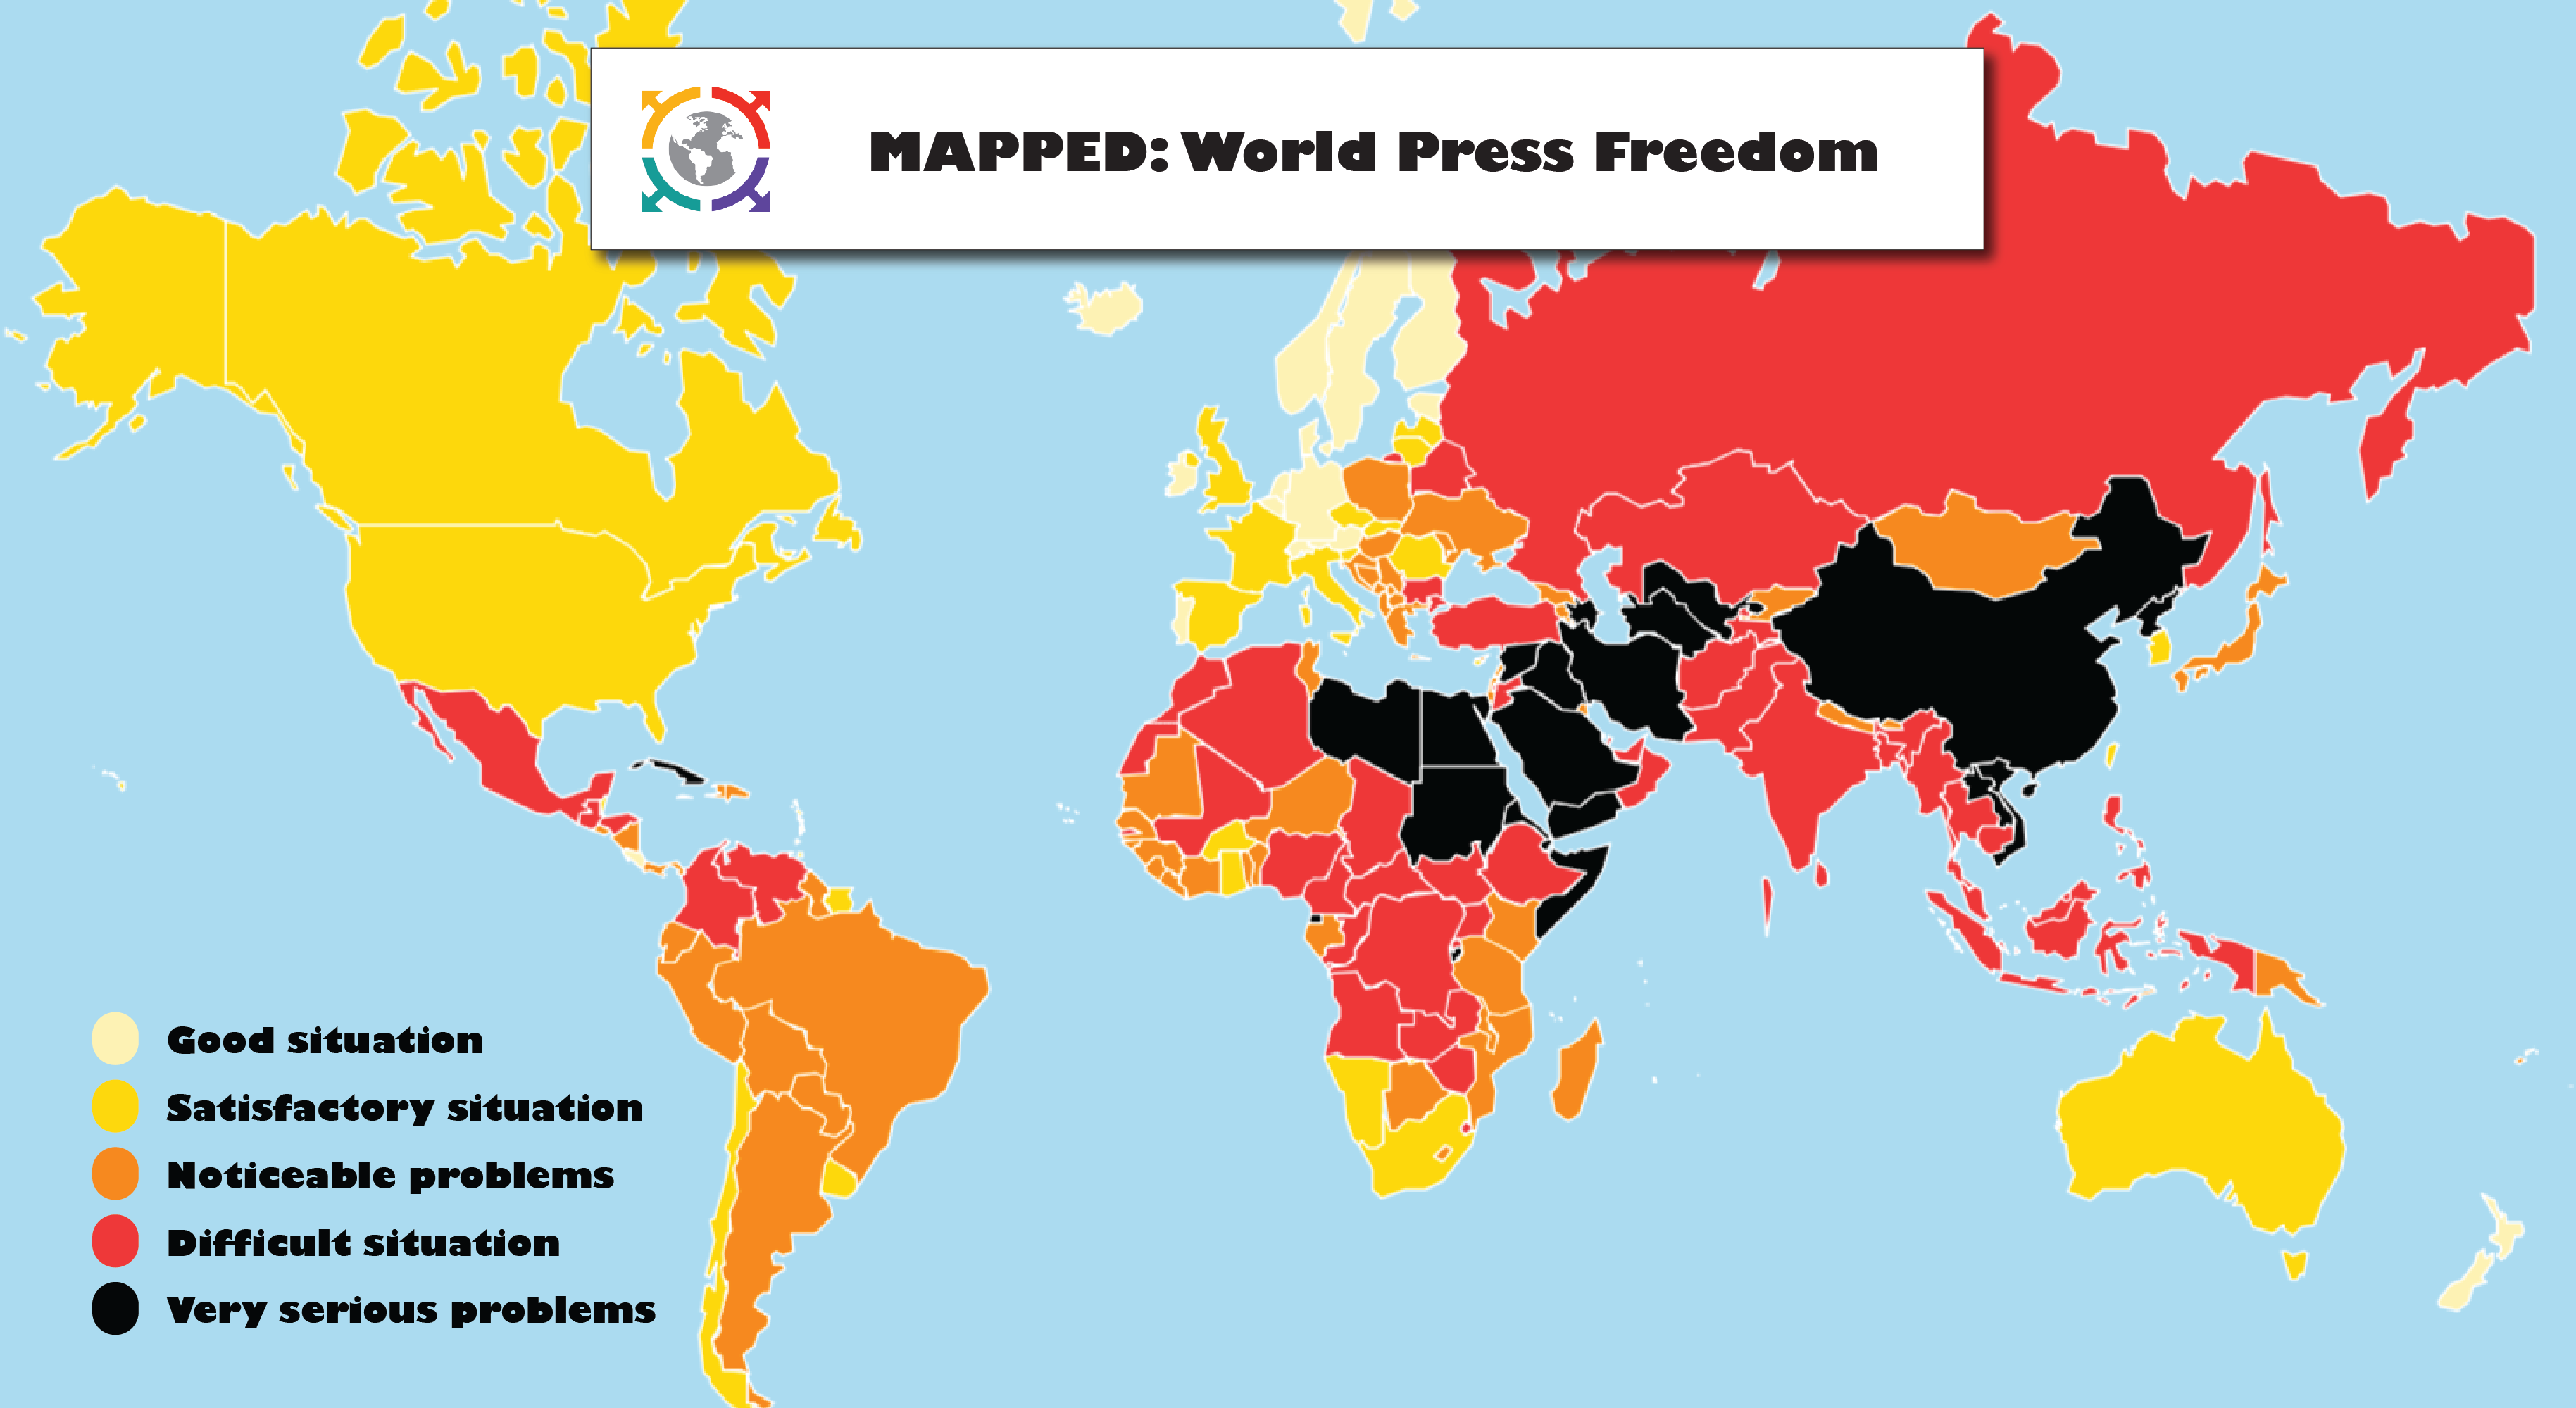 World Press Freedom Mapped 